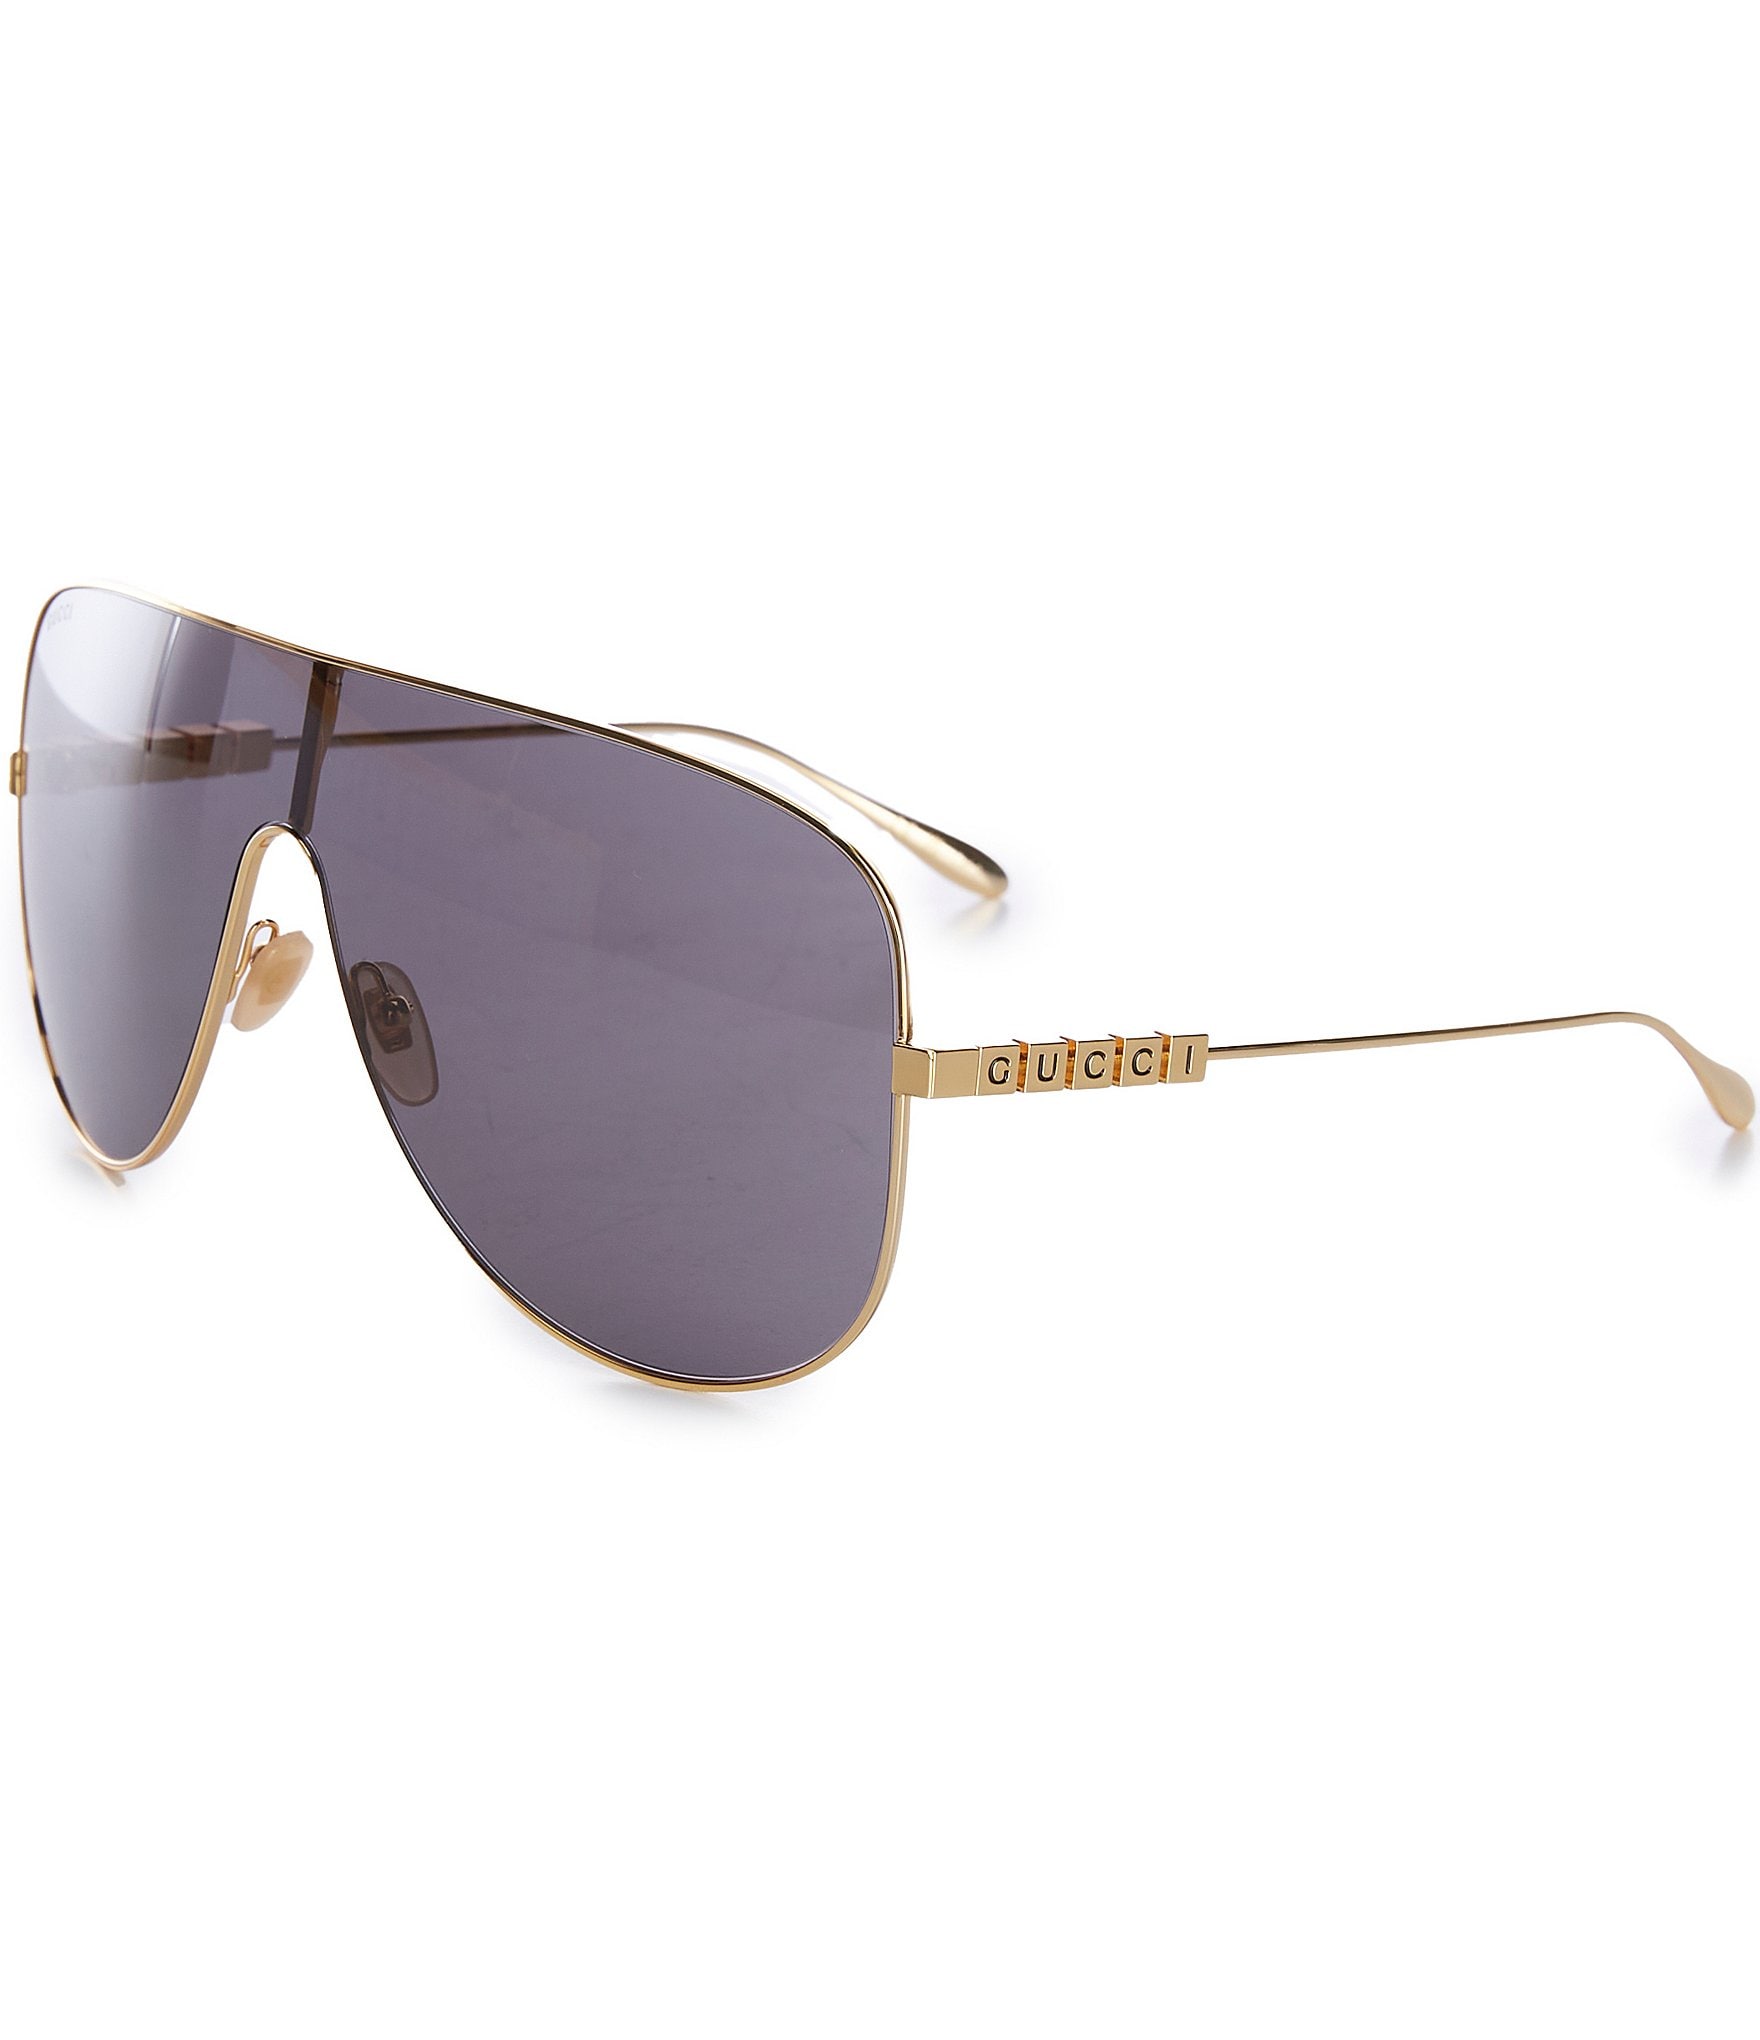 Versace Unisex Ve2249 65mm Standard Aviator Sunglasses